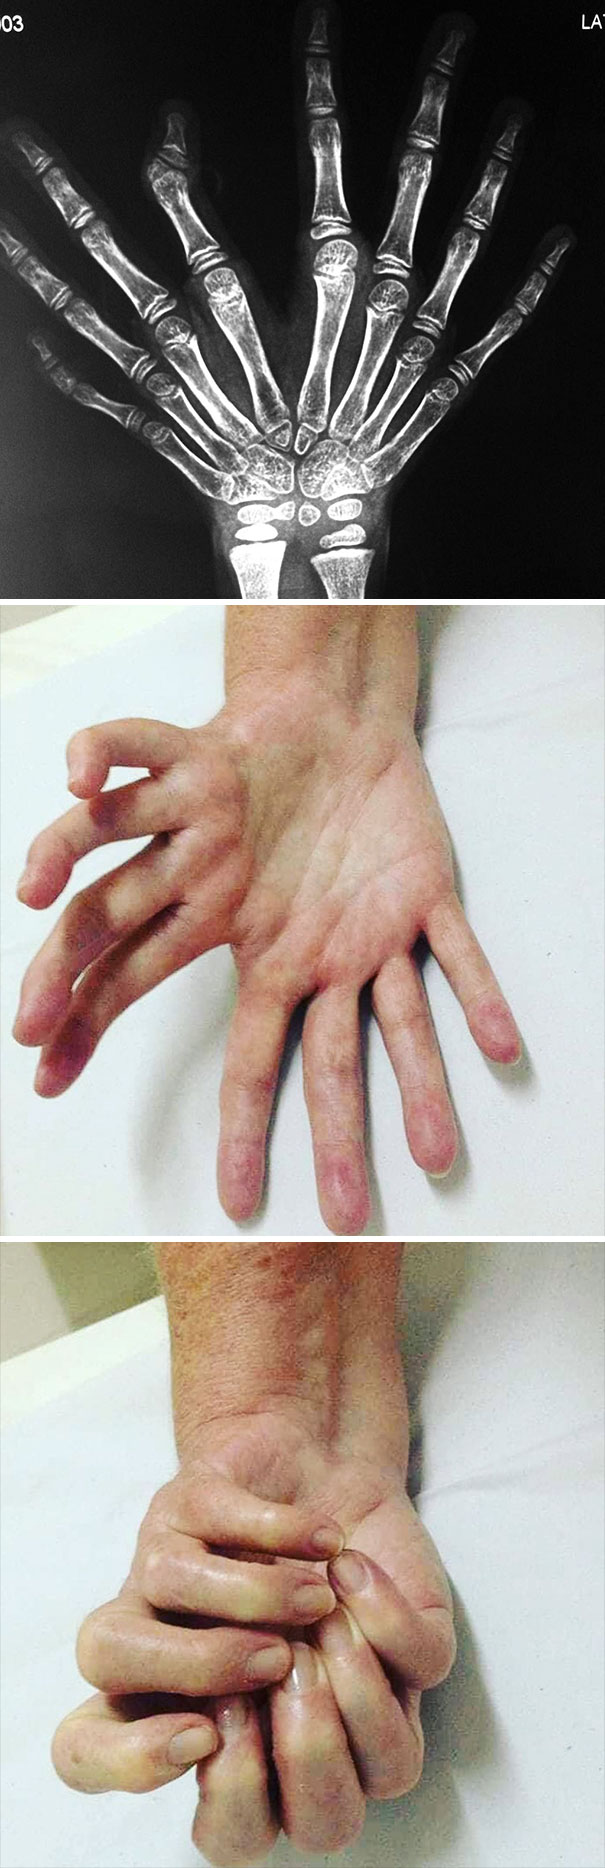 Ulnar Dimelia Or Mirror Hand Syndrome